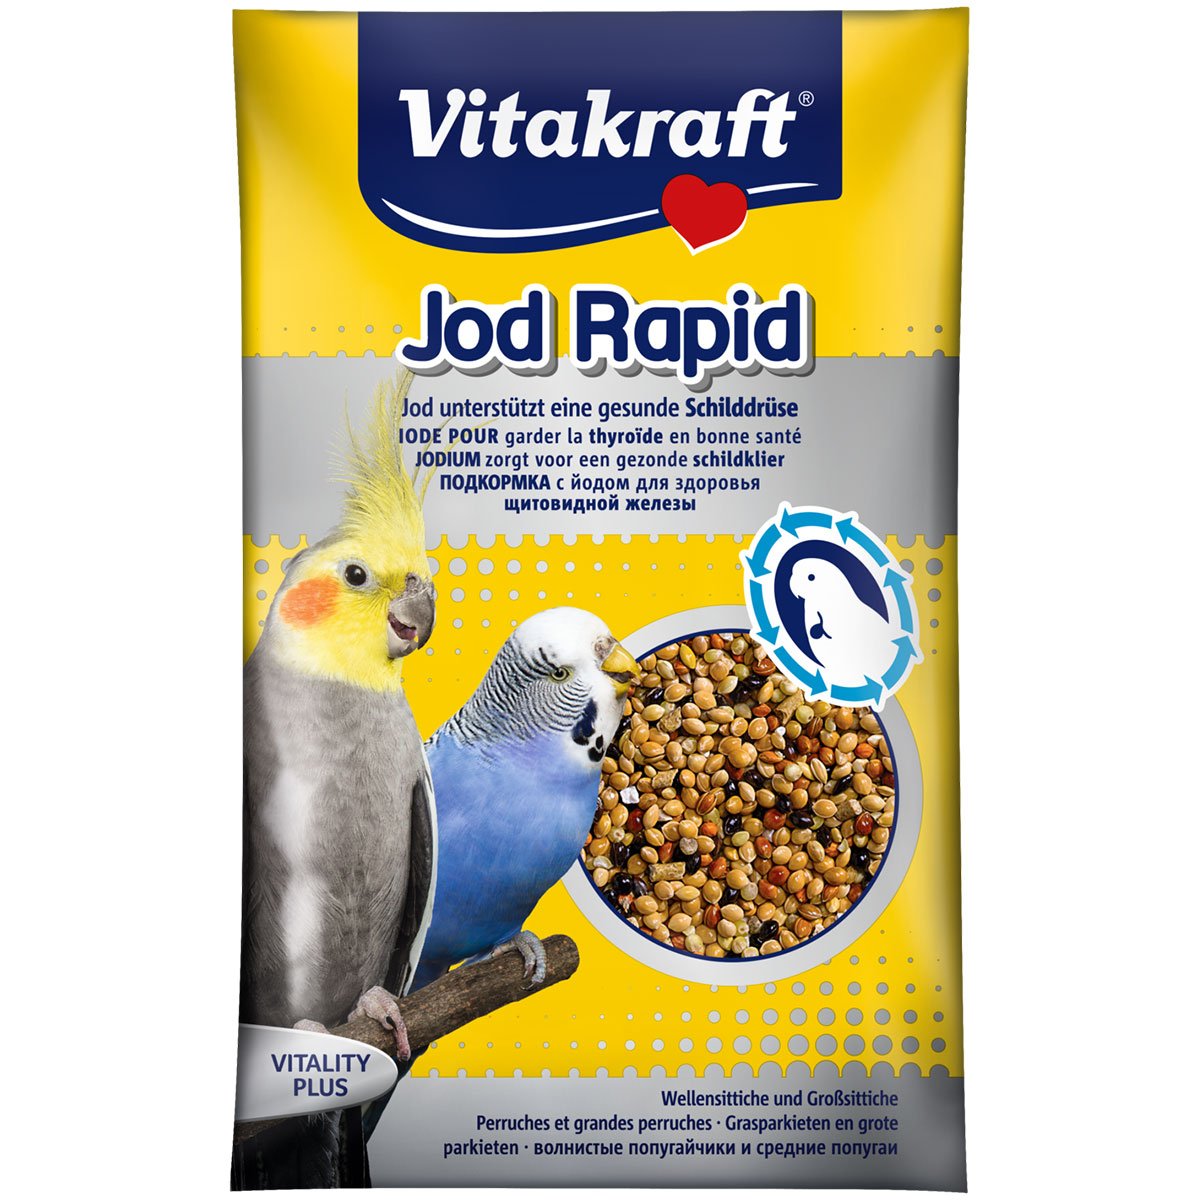 Vitakraft krmivo pro malé papoušky Jod Rapid 5× 20 g